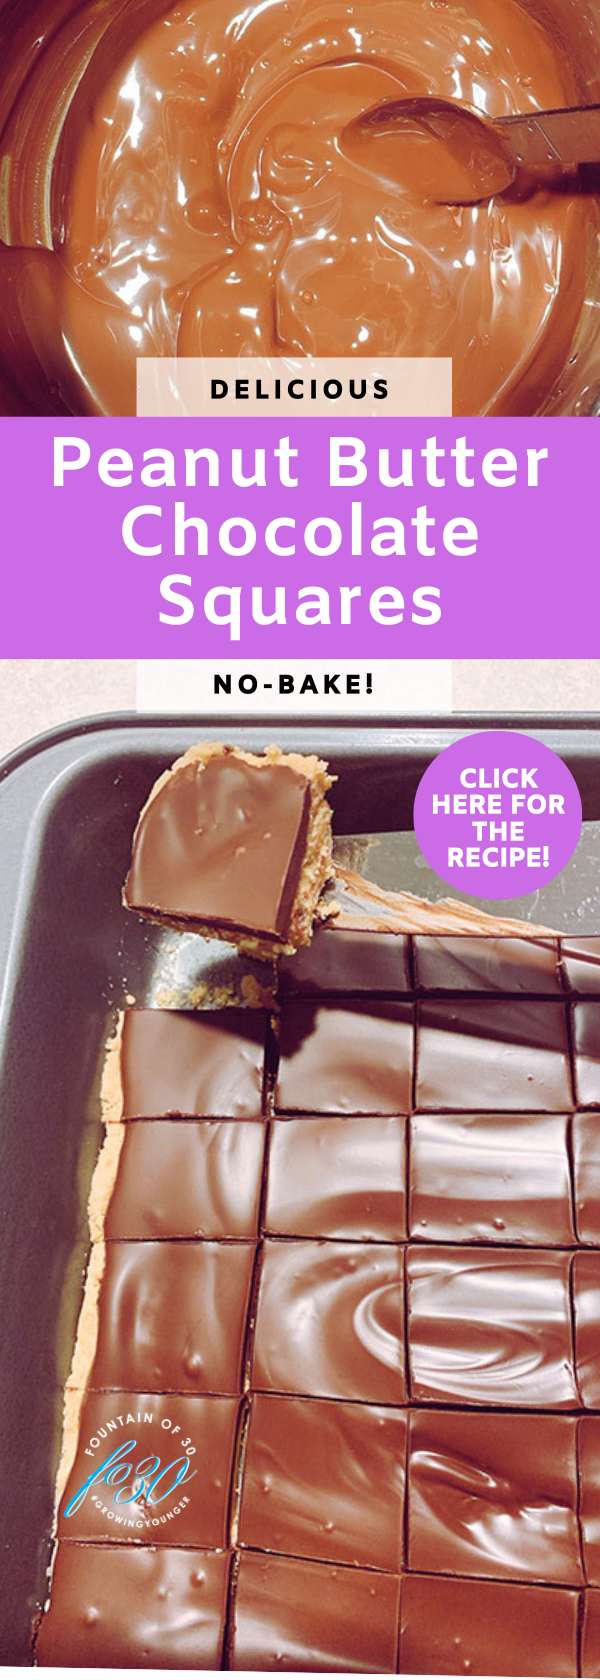 delicious no bake peanut butter chocolate squares fountainof30